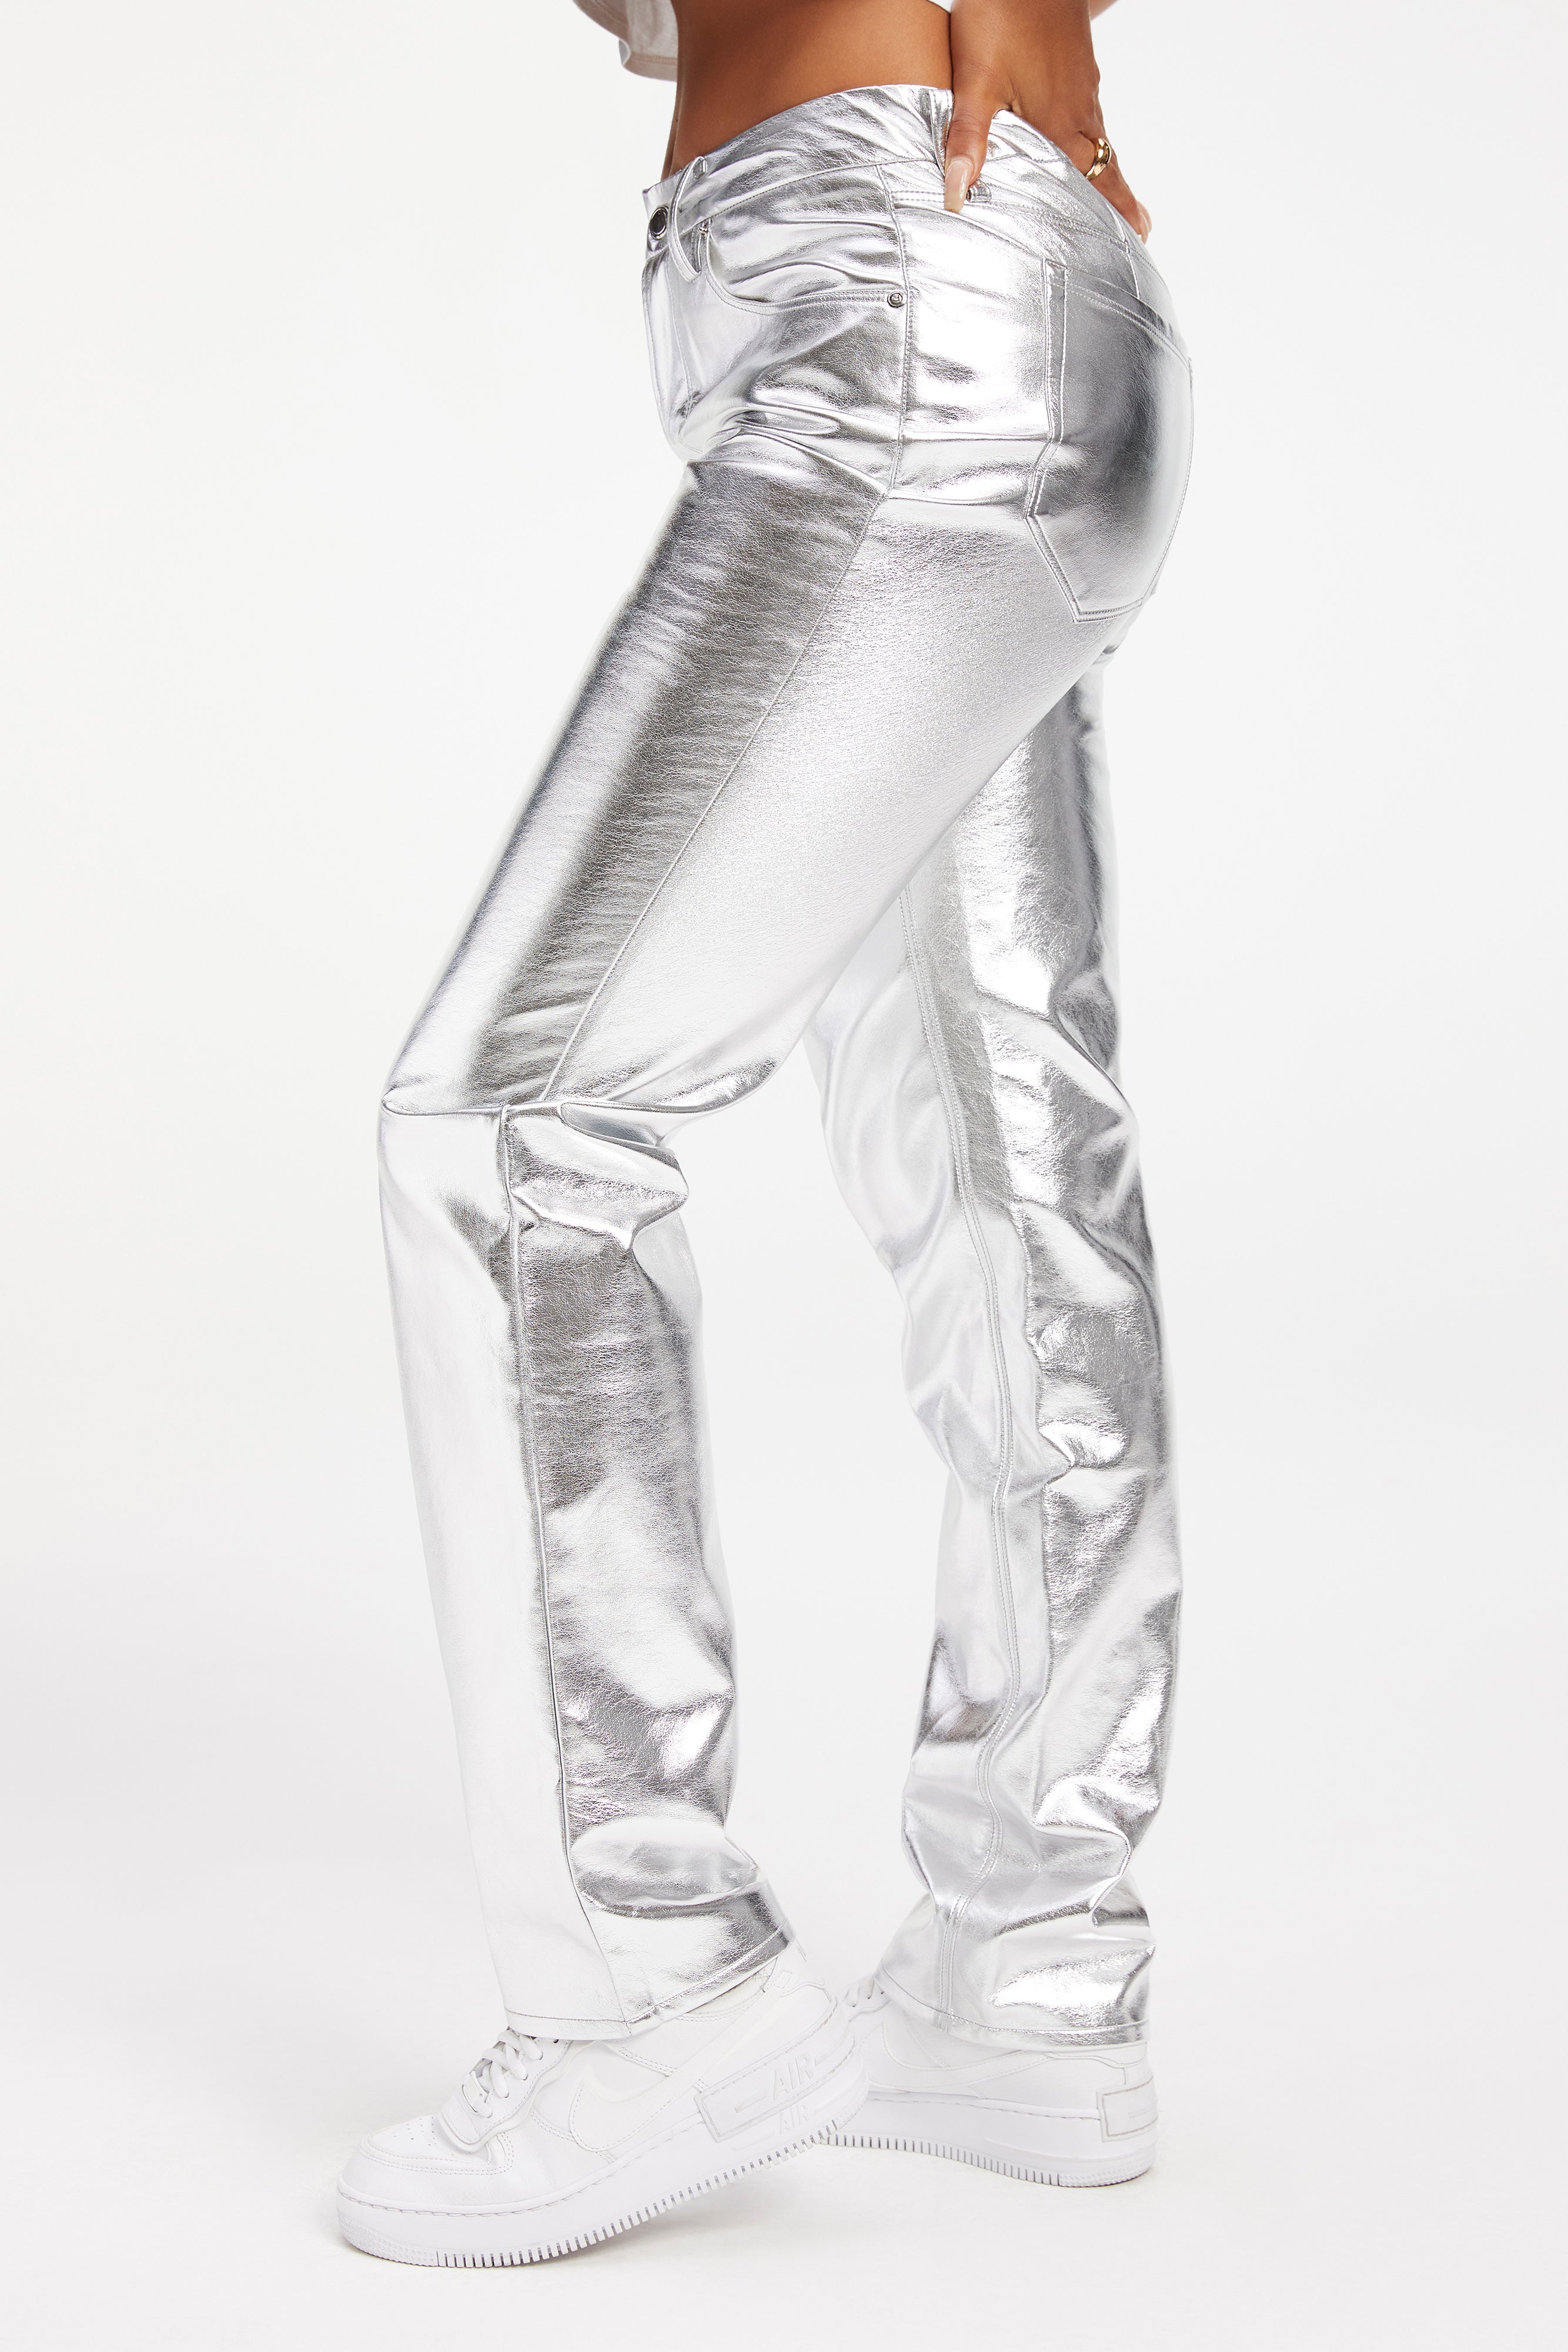 Zara | Pants & Jumpsuits | New Zara Silver Shiny Metallic Shiny Cargo Space  Pants Bloggers Fave | Poshmark